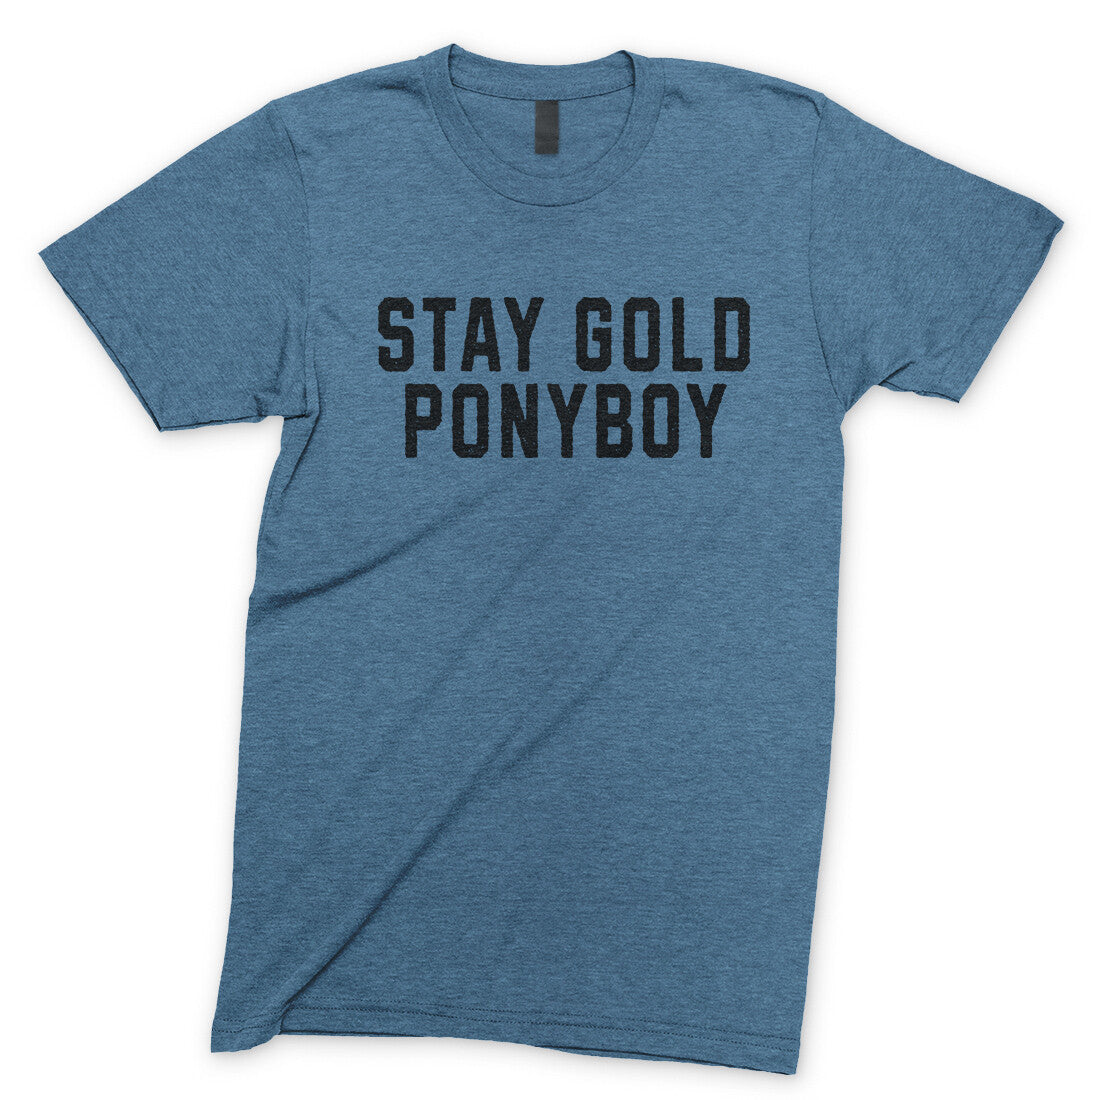 Stay Gold Ponyboy in Heather Indigo Color